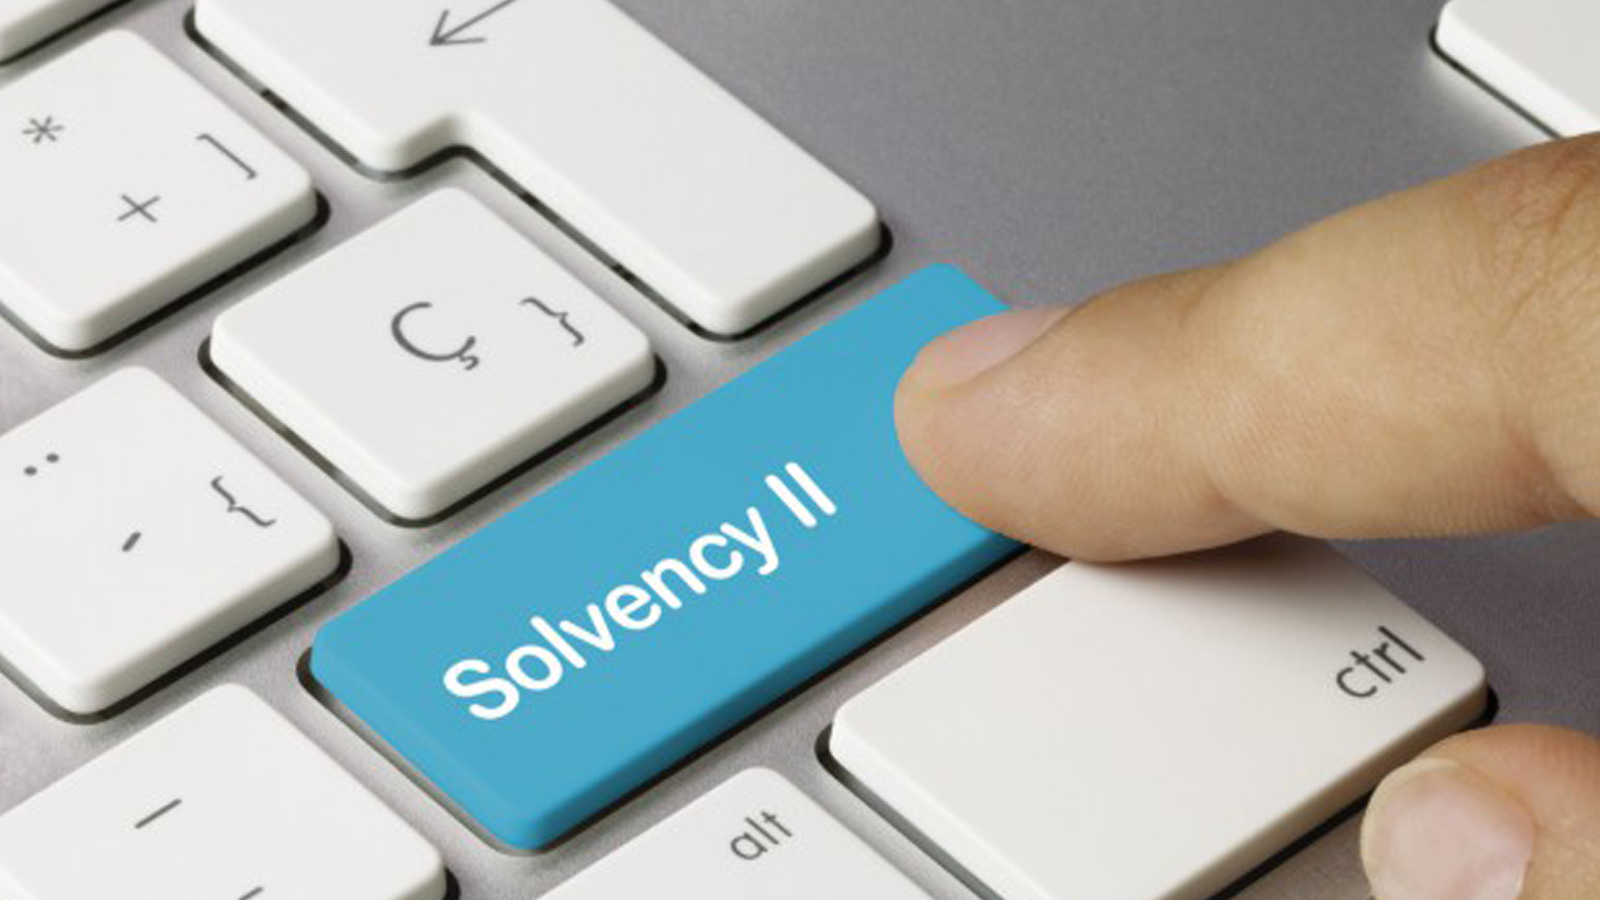 Solvency II: “Χρυσή ευκαιρία” για την απελευθέρωση δισεκατομμυρίων κεφαλαίων για την Ευρώπη